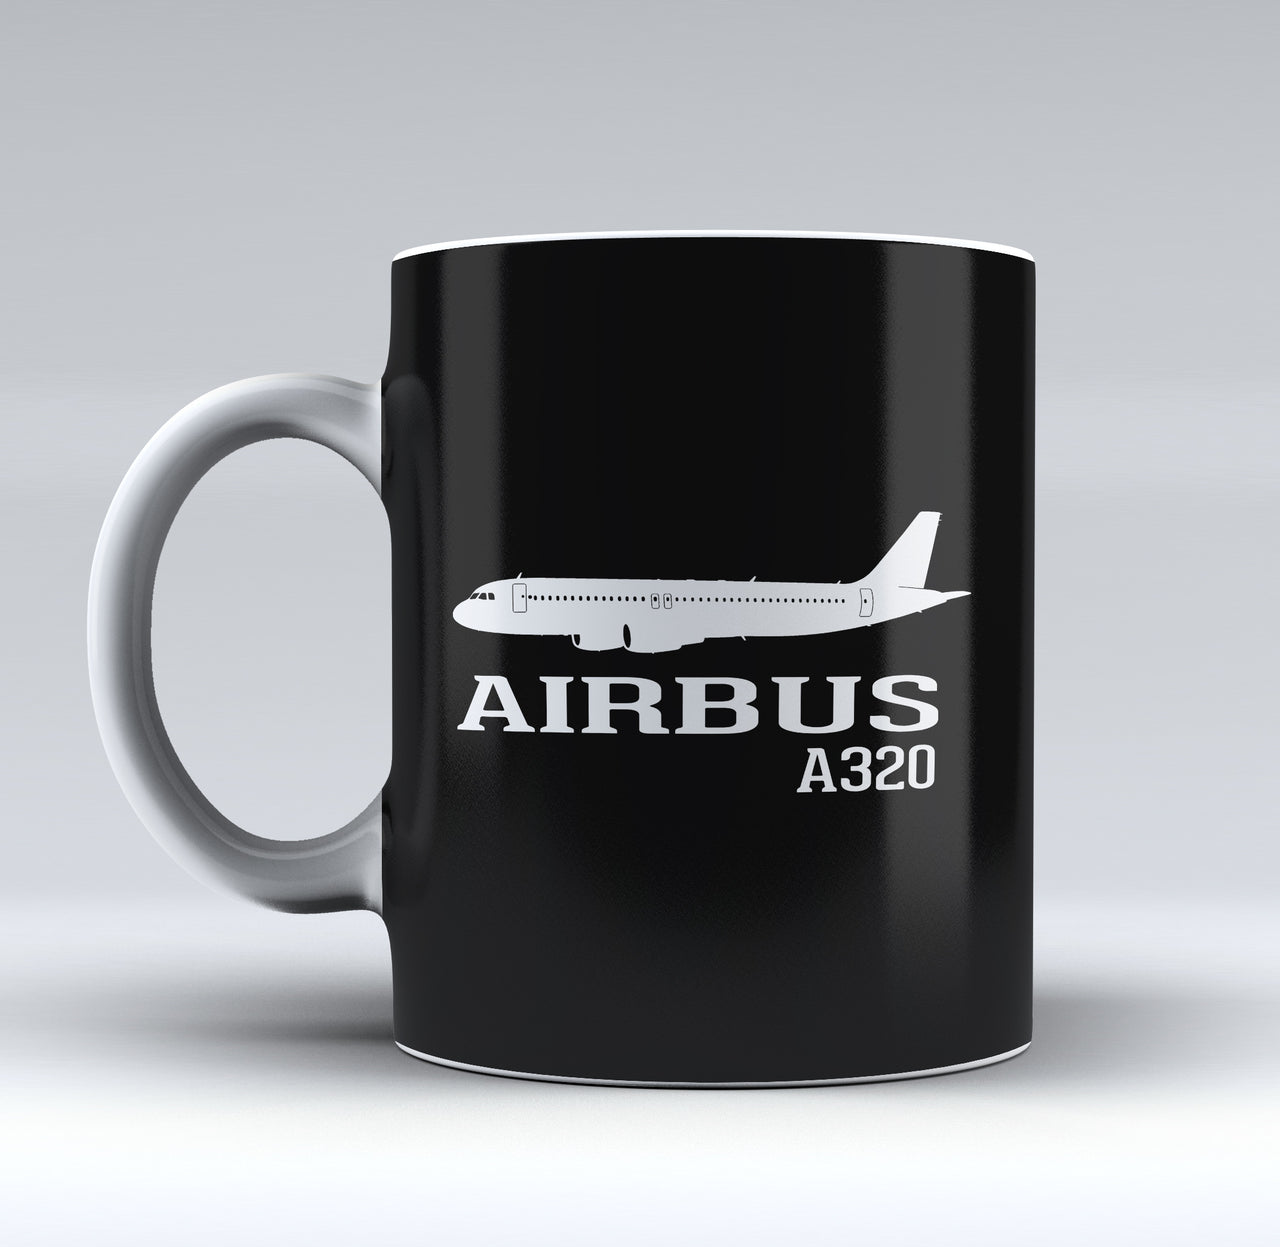 Airbus A320 Printed & Designed Mugs